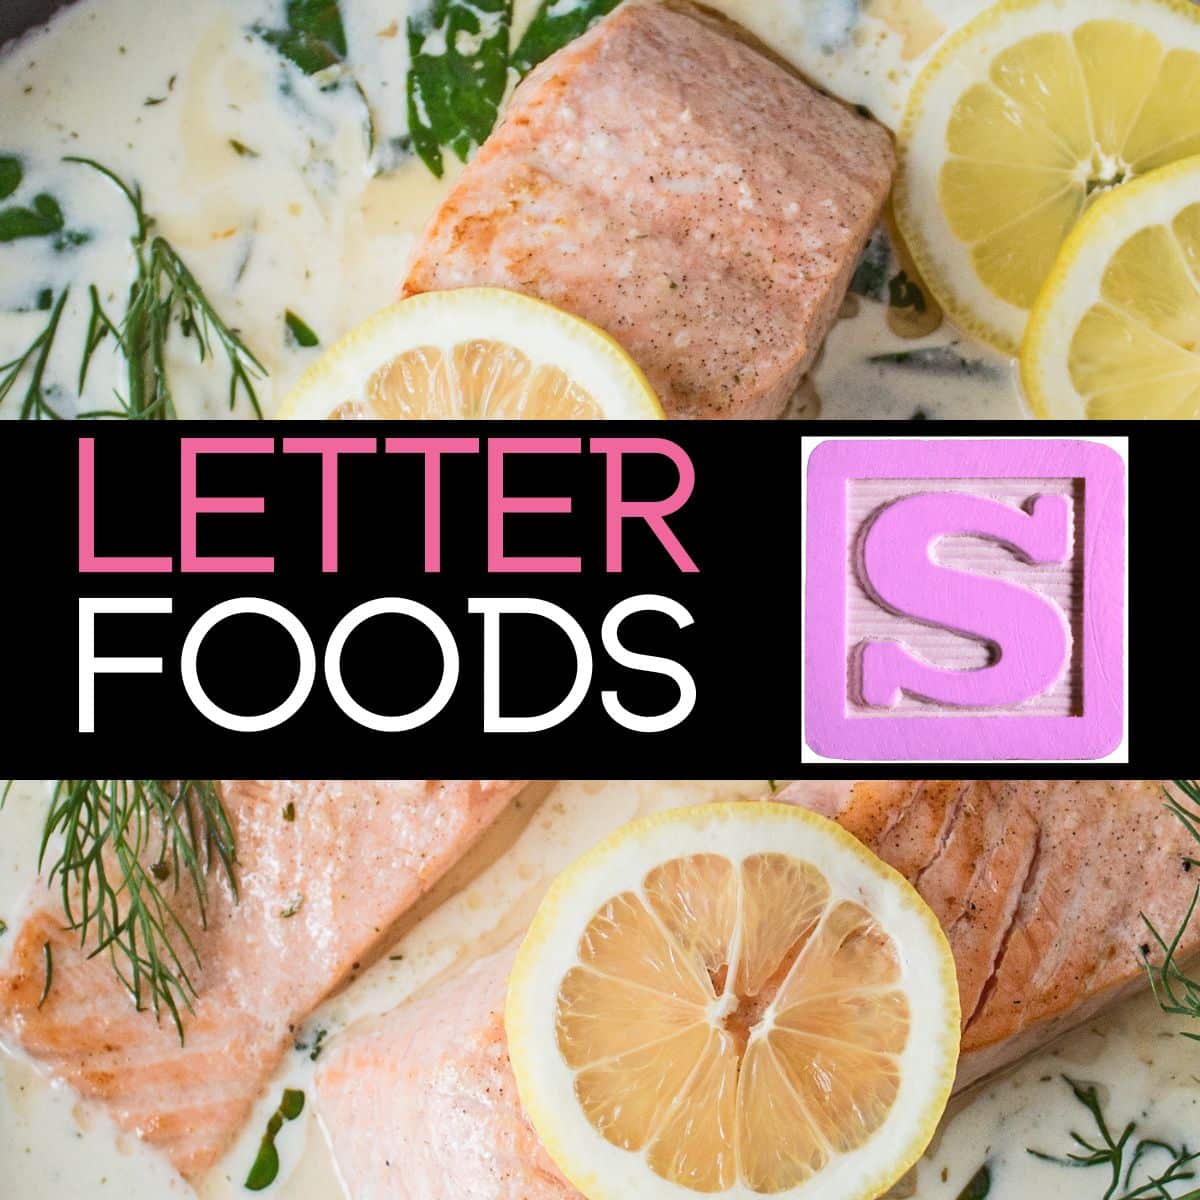 Kvadratna slika za hranu koja počinje slovom S, s lososom na fotografiji.